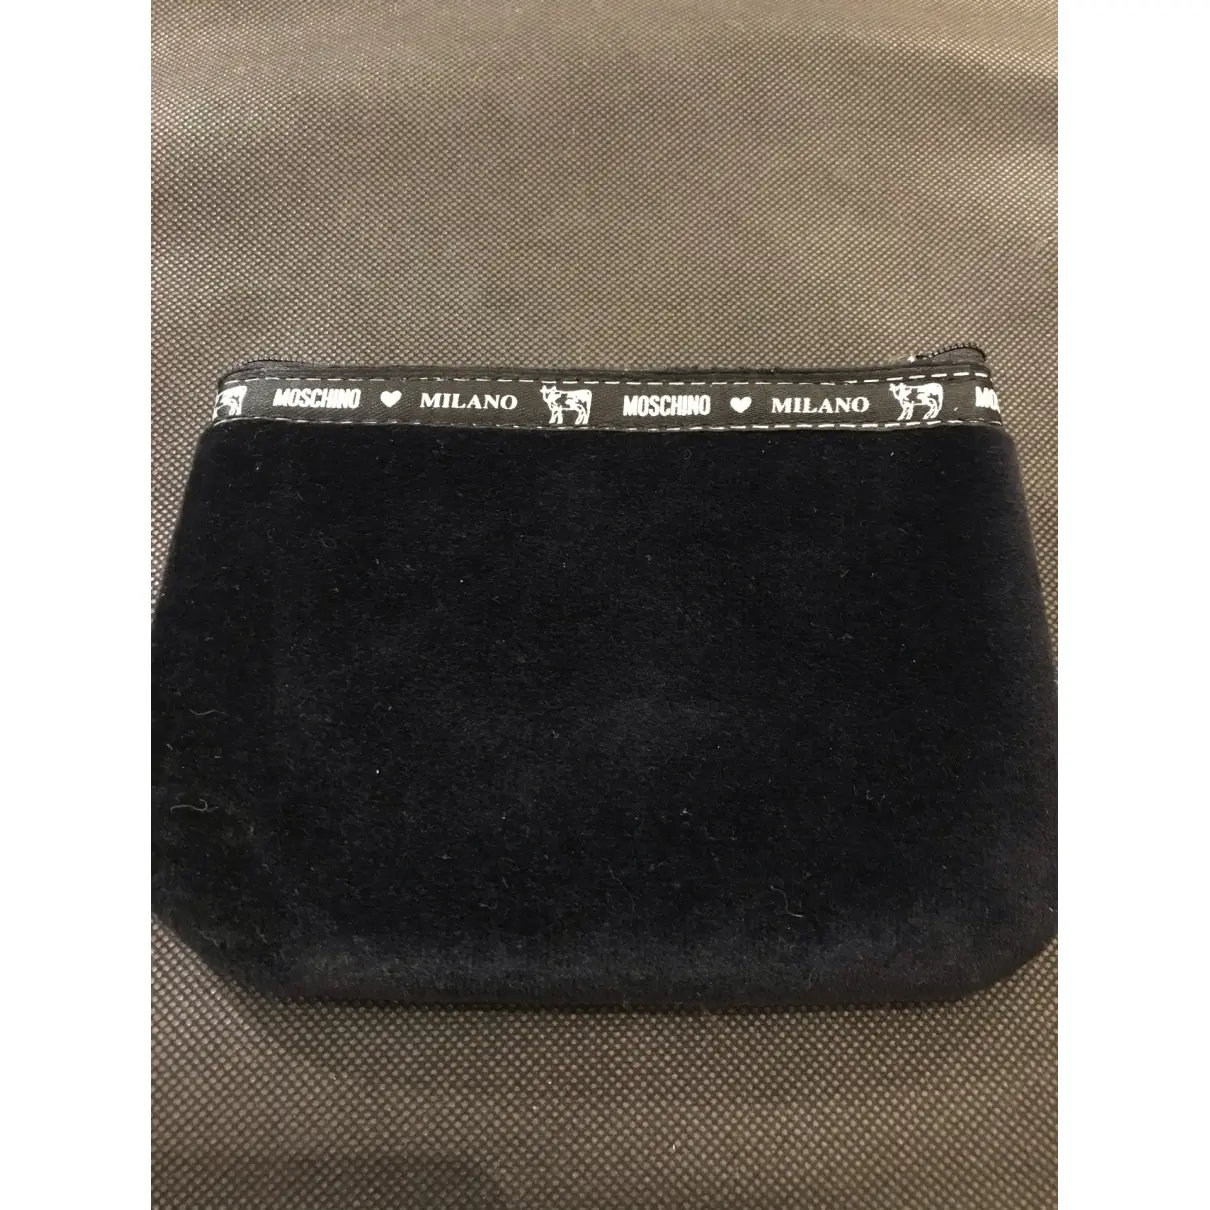 Buy Moschino Velvet purse online